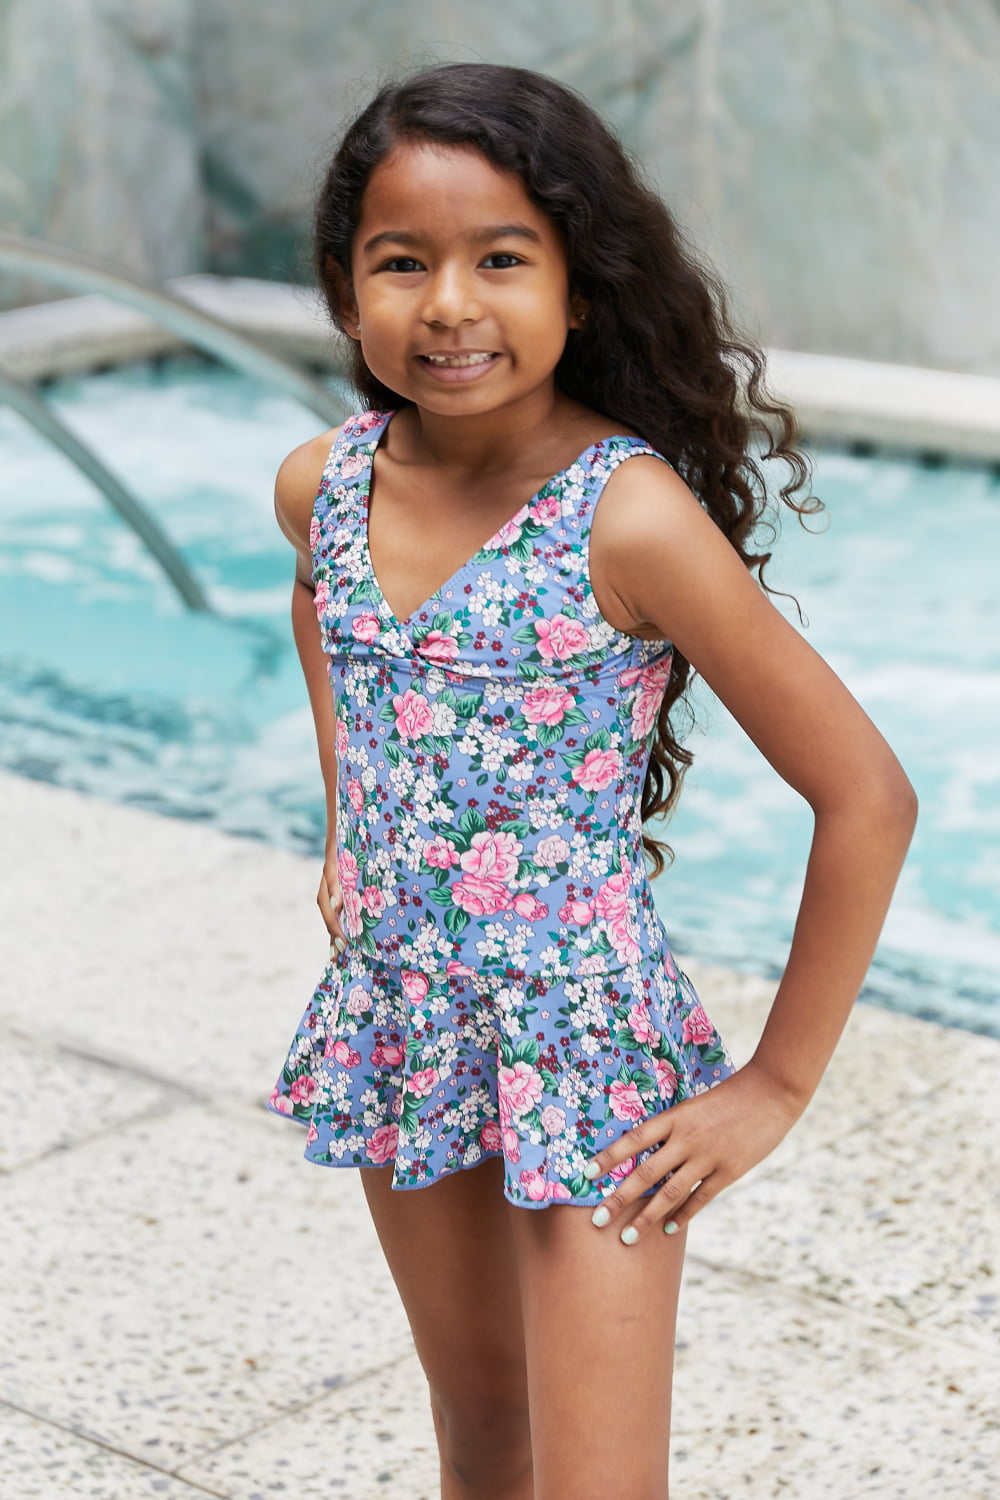 Toodler / Kids - Girls - Marina West Swim Clear Waters Swim Dress in Rose Sky - Sizes 2-3T-Kids10/11